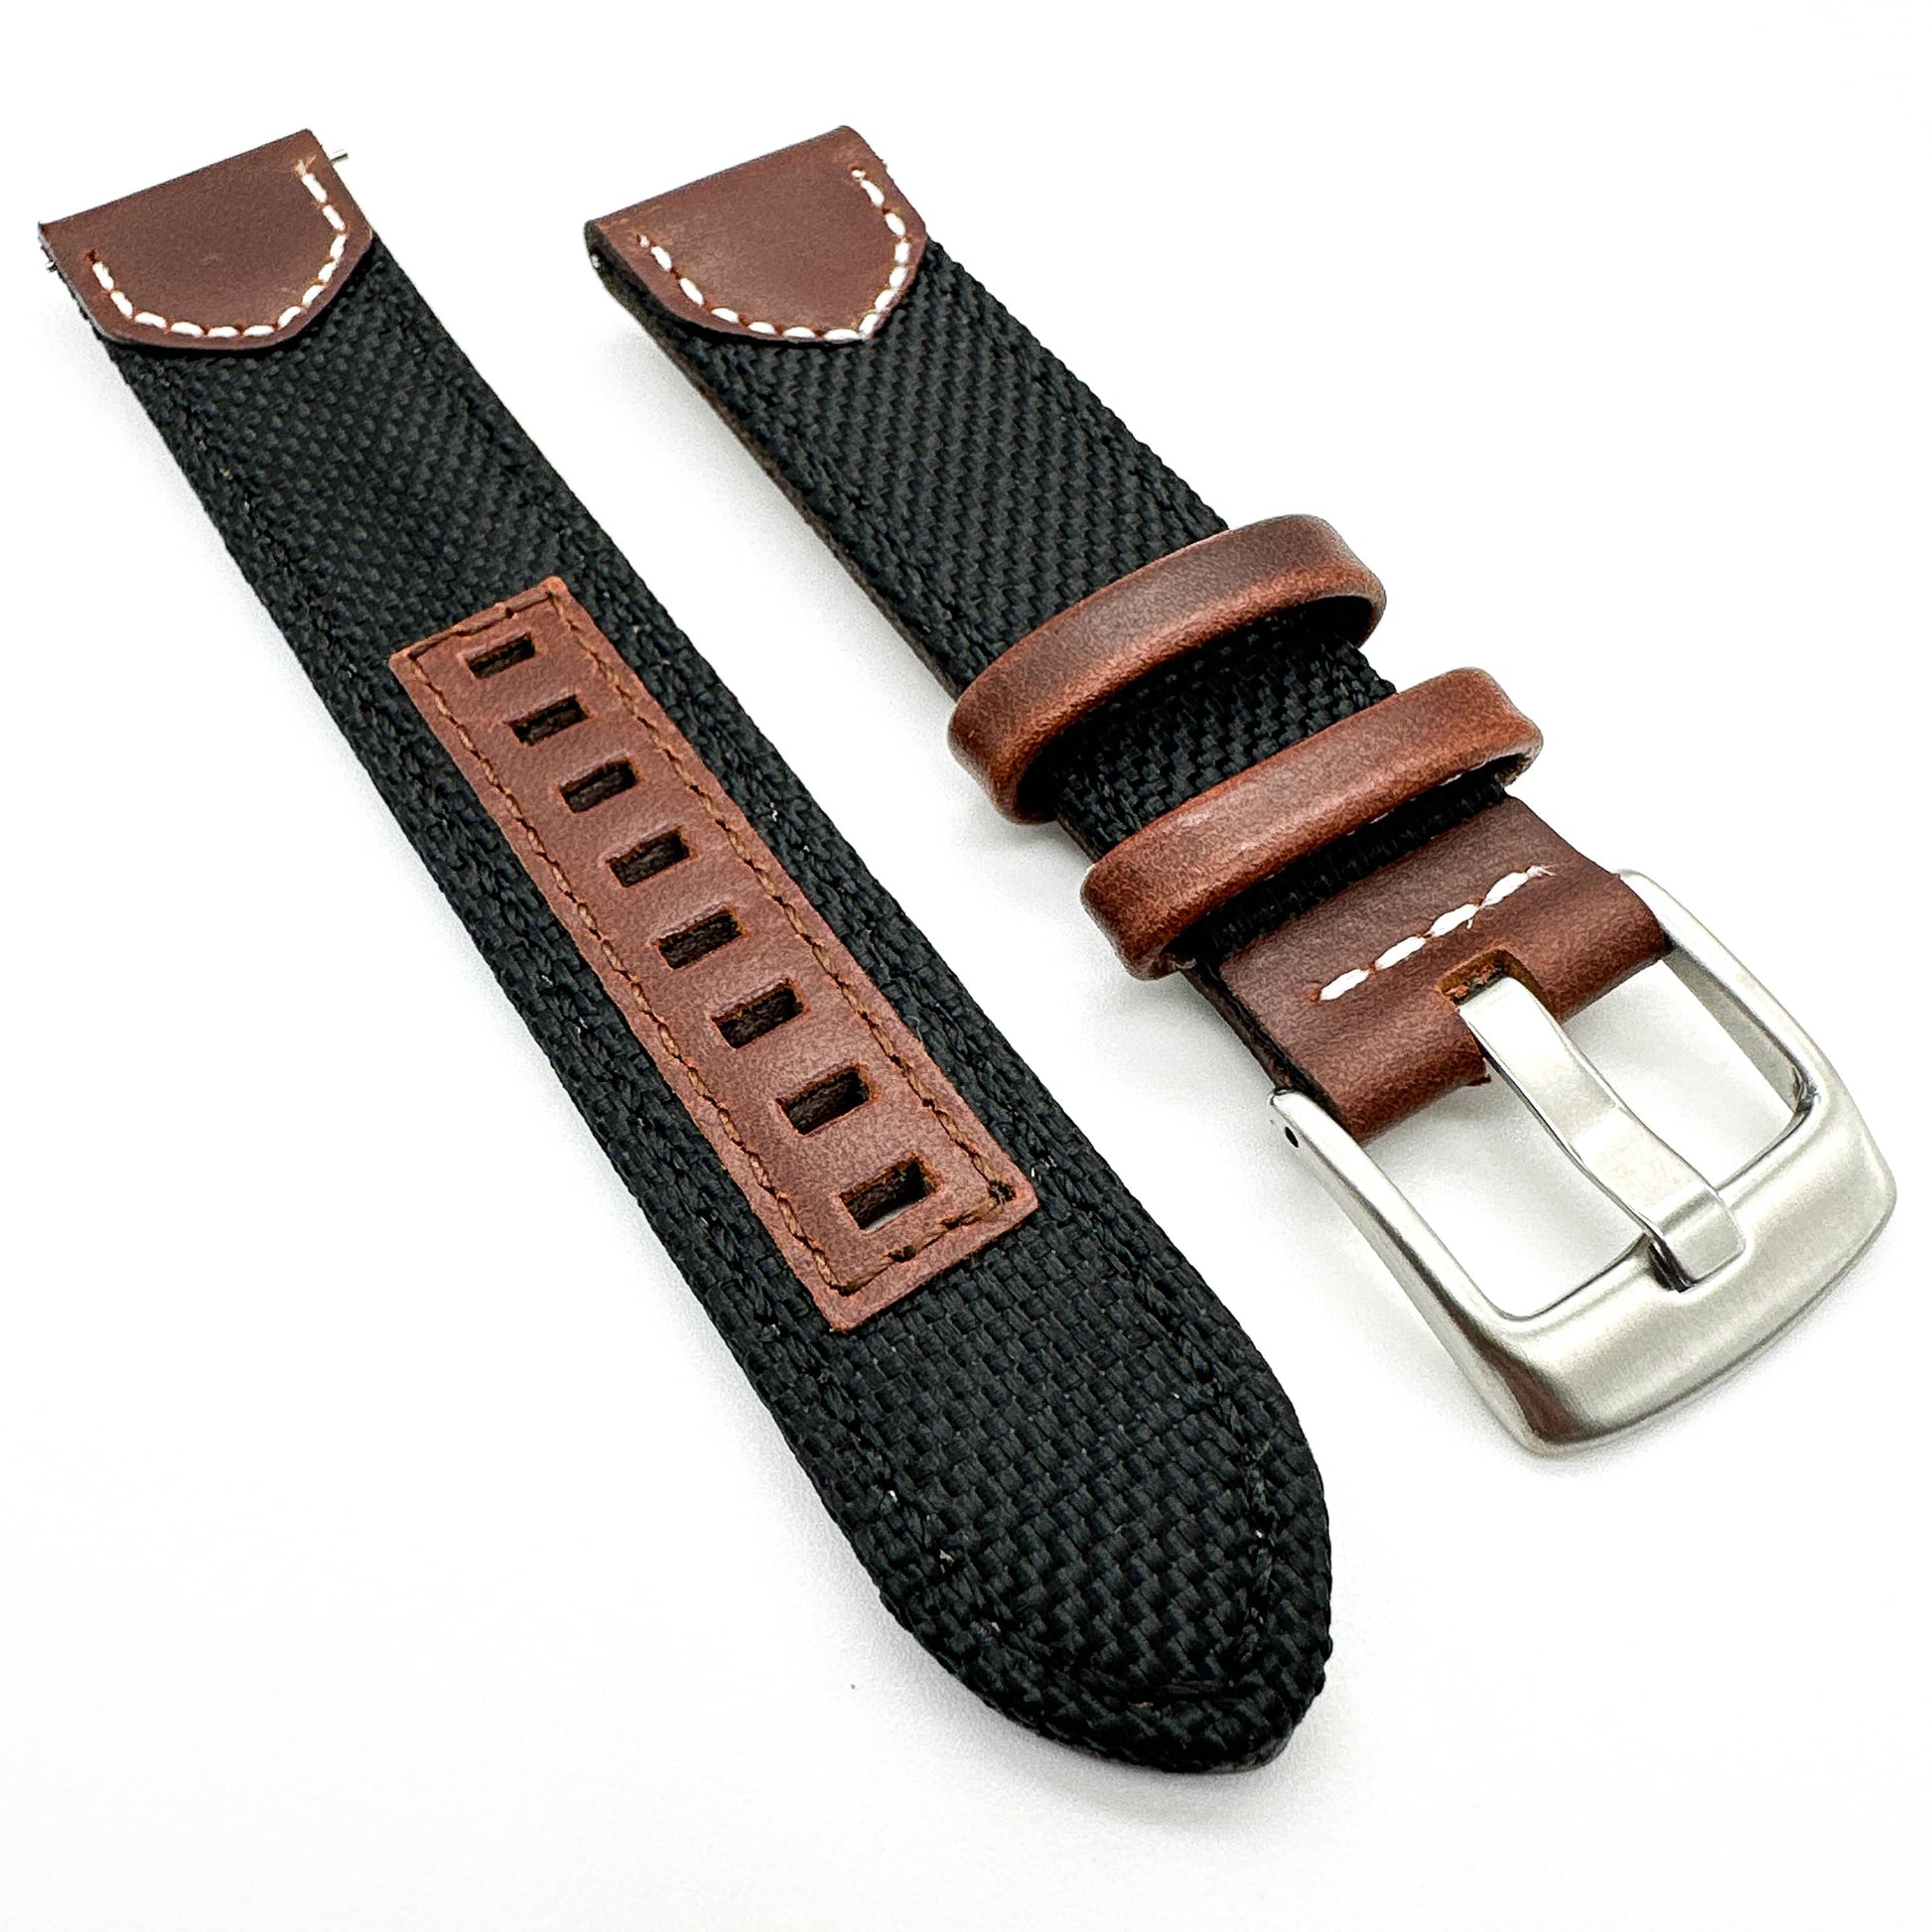 Sailcloth Nylon Leather Hybrid Watch Strap Black 2